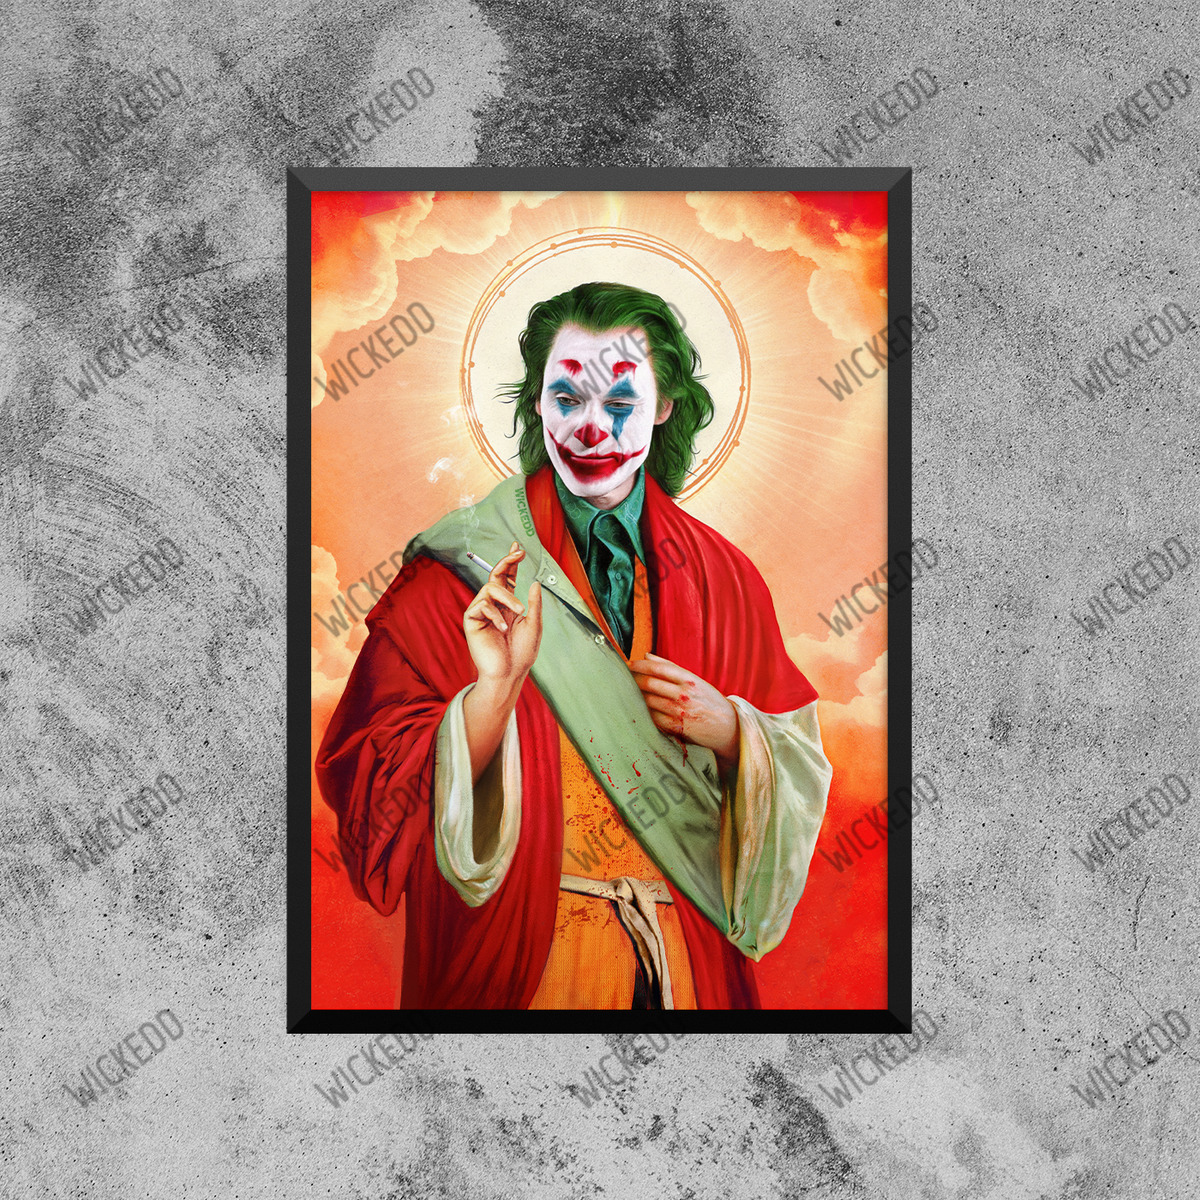 Saint Joker (Phoenix)